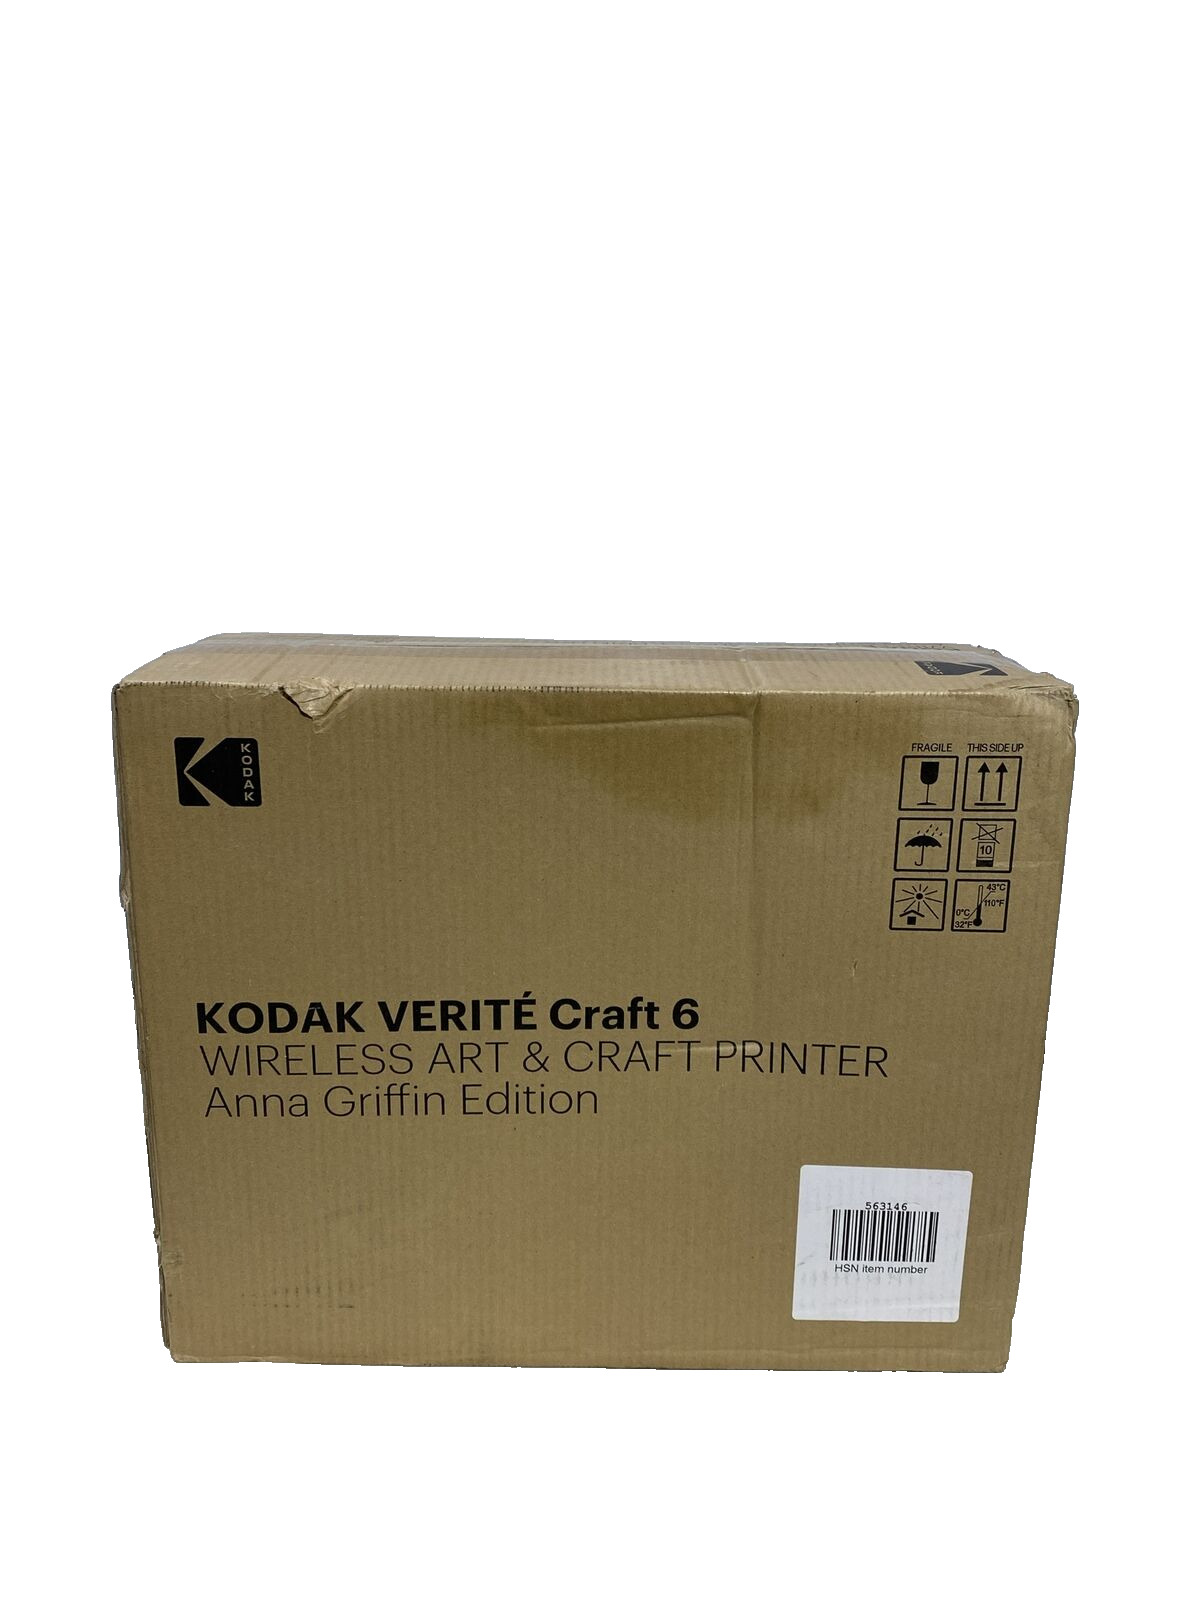 Kodak Verite Craft 6  Wireless Art and Craft All in One Printer